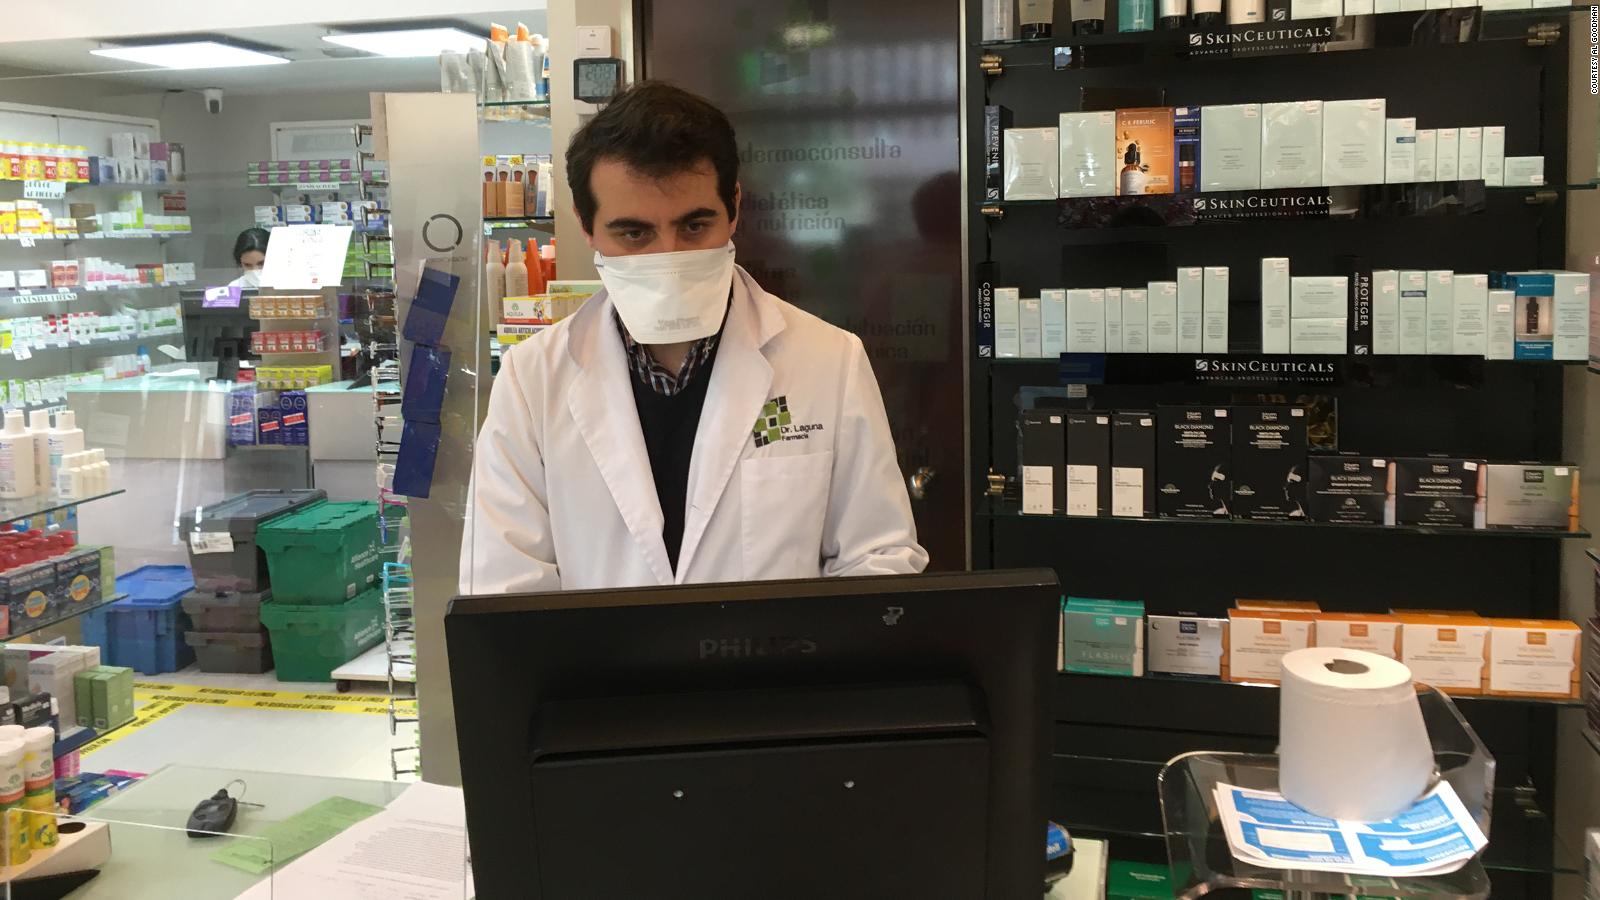 Spain coronavirus: Black market and price gouging hinders fight - CNN